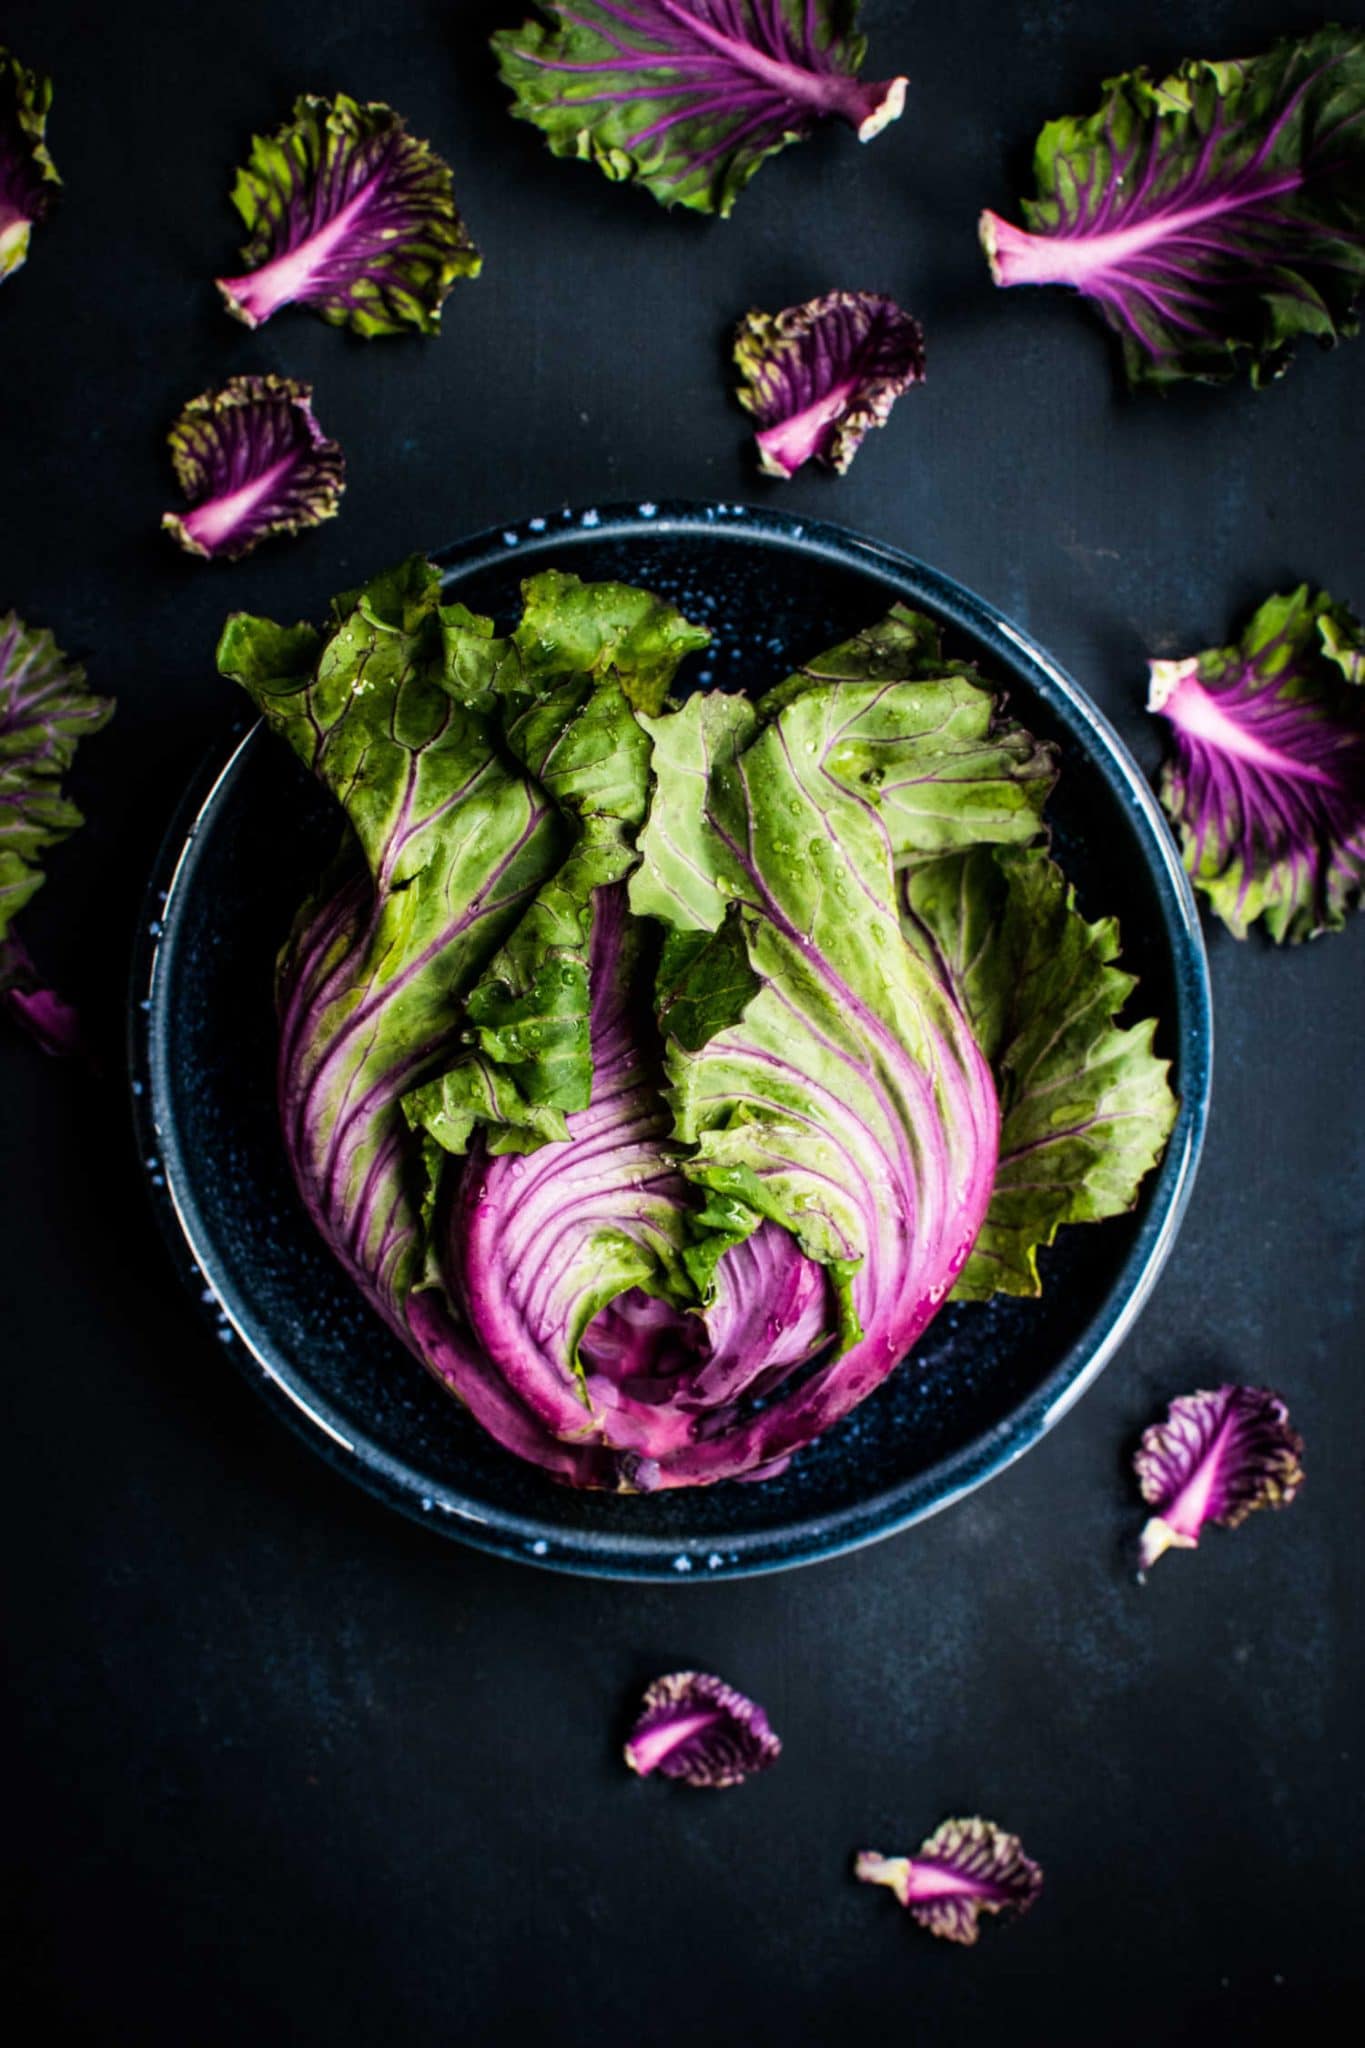 How To Store Lettuce To Romaine Fresher for Longer